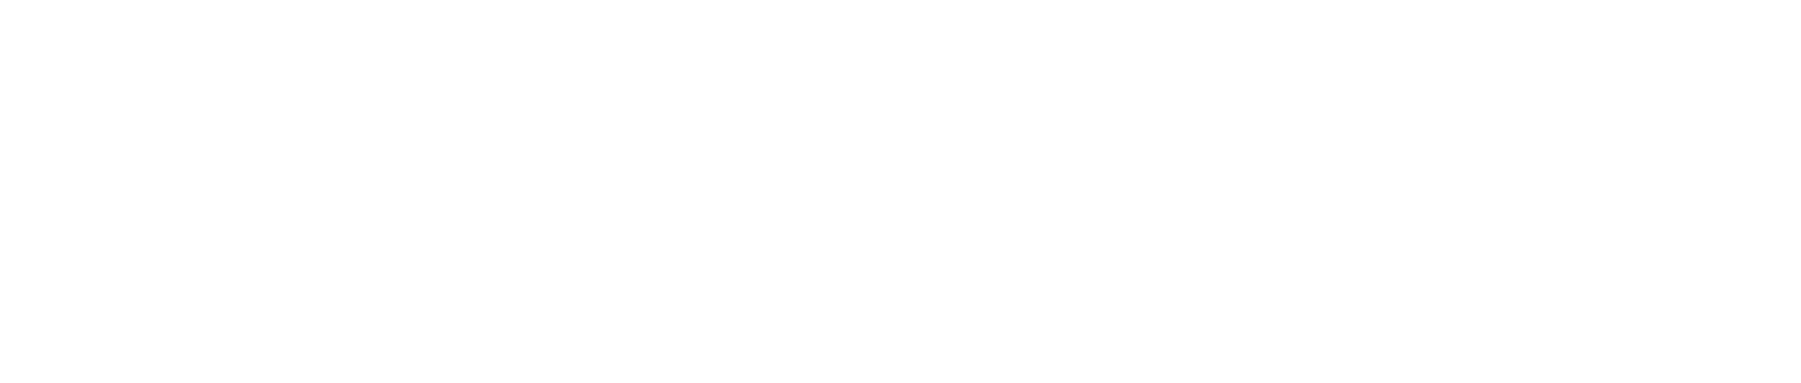 sex resort